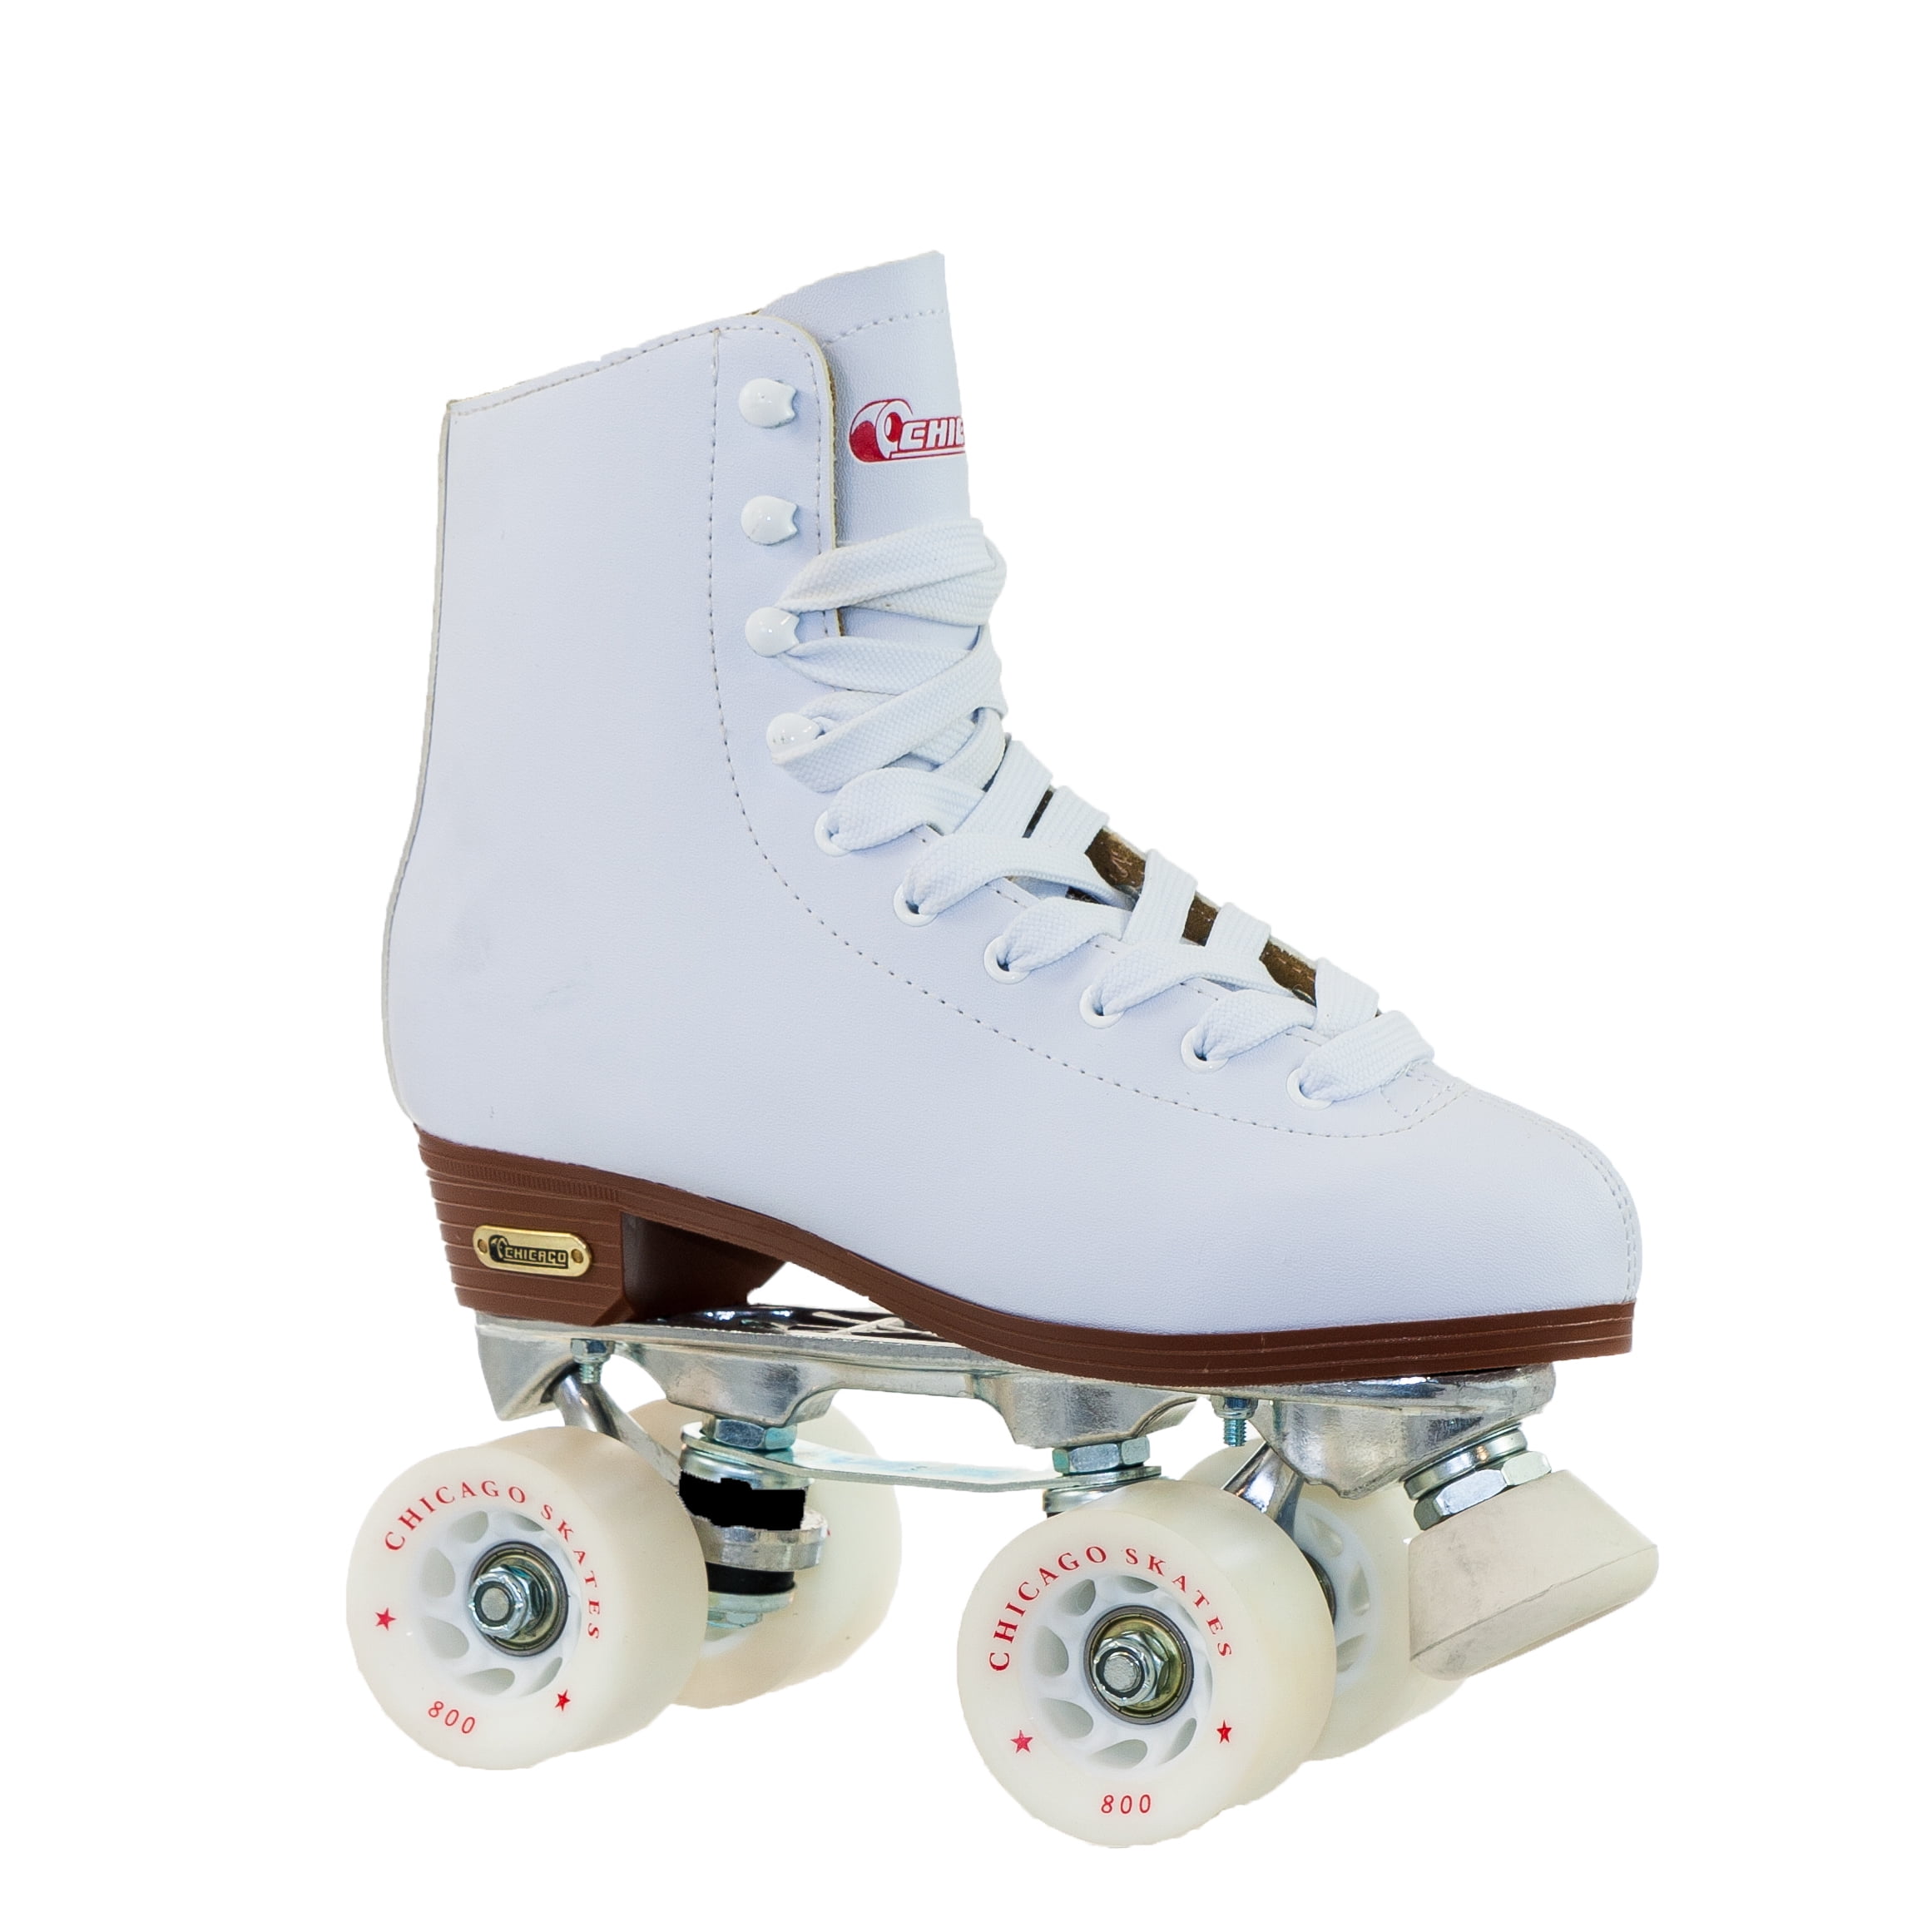 Chicago Ladies Rink Roller Skates White Size 5 Crs400 for sale online 